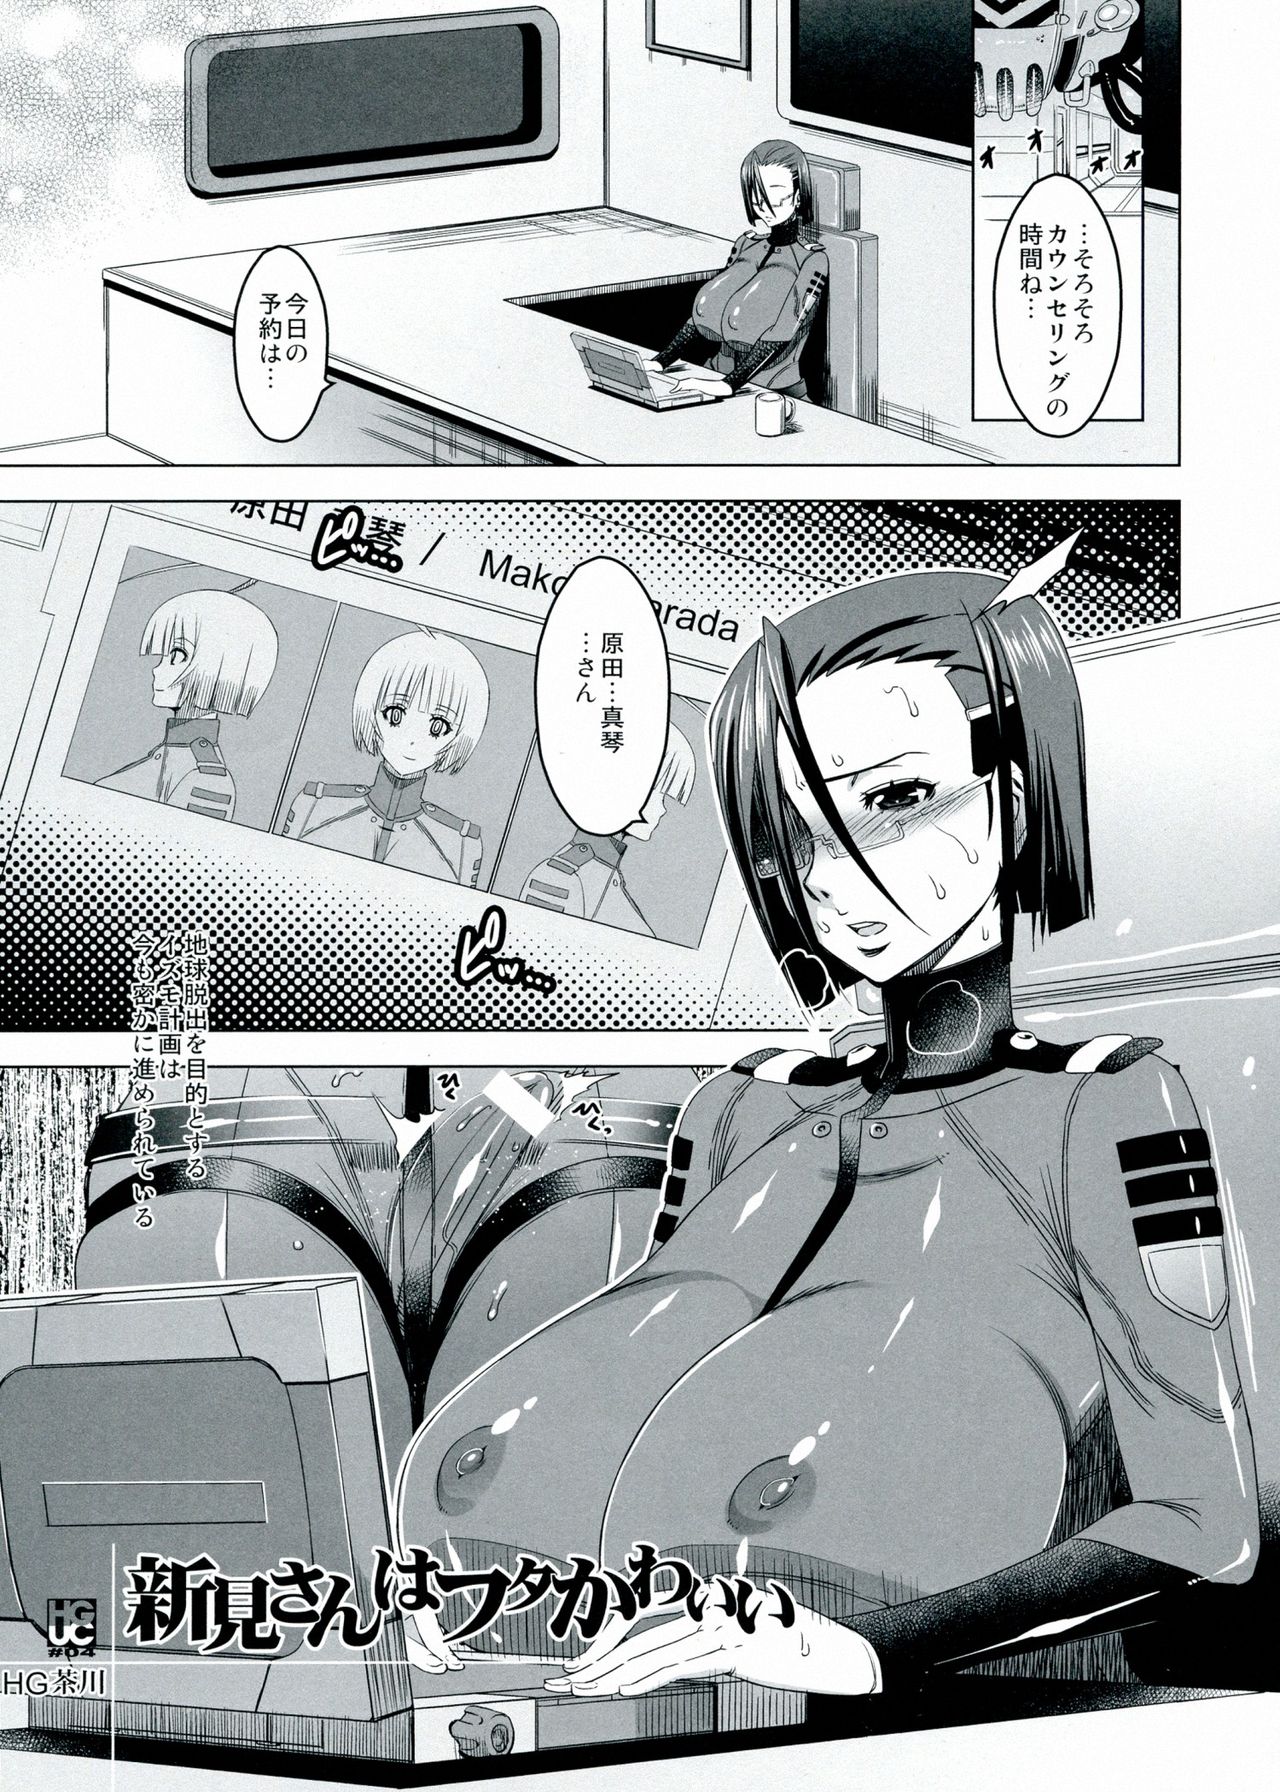 (Futaket 9) [HGH (HG Chagawa)] HGUC#04: Niimi-san wa Futa Kawaii (Space Battleship Yamato 2199) (ふたけっと9) [HGH (HG茶川)] HGUC#04:新見さんはフタかわいい (宇宙戦艦ヤマト2199)